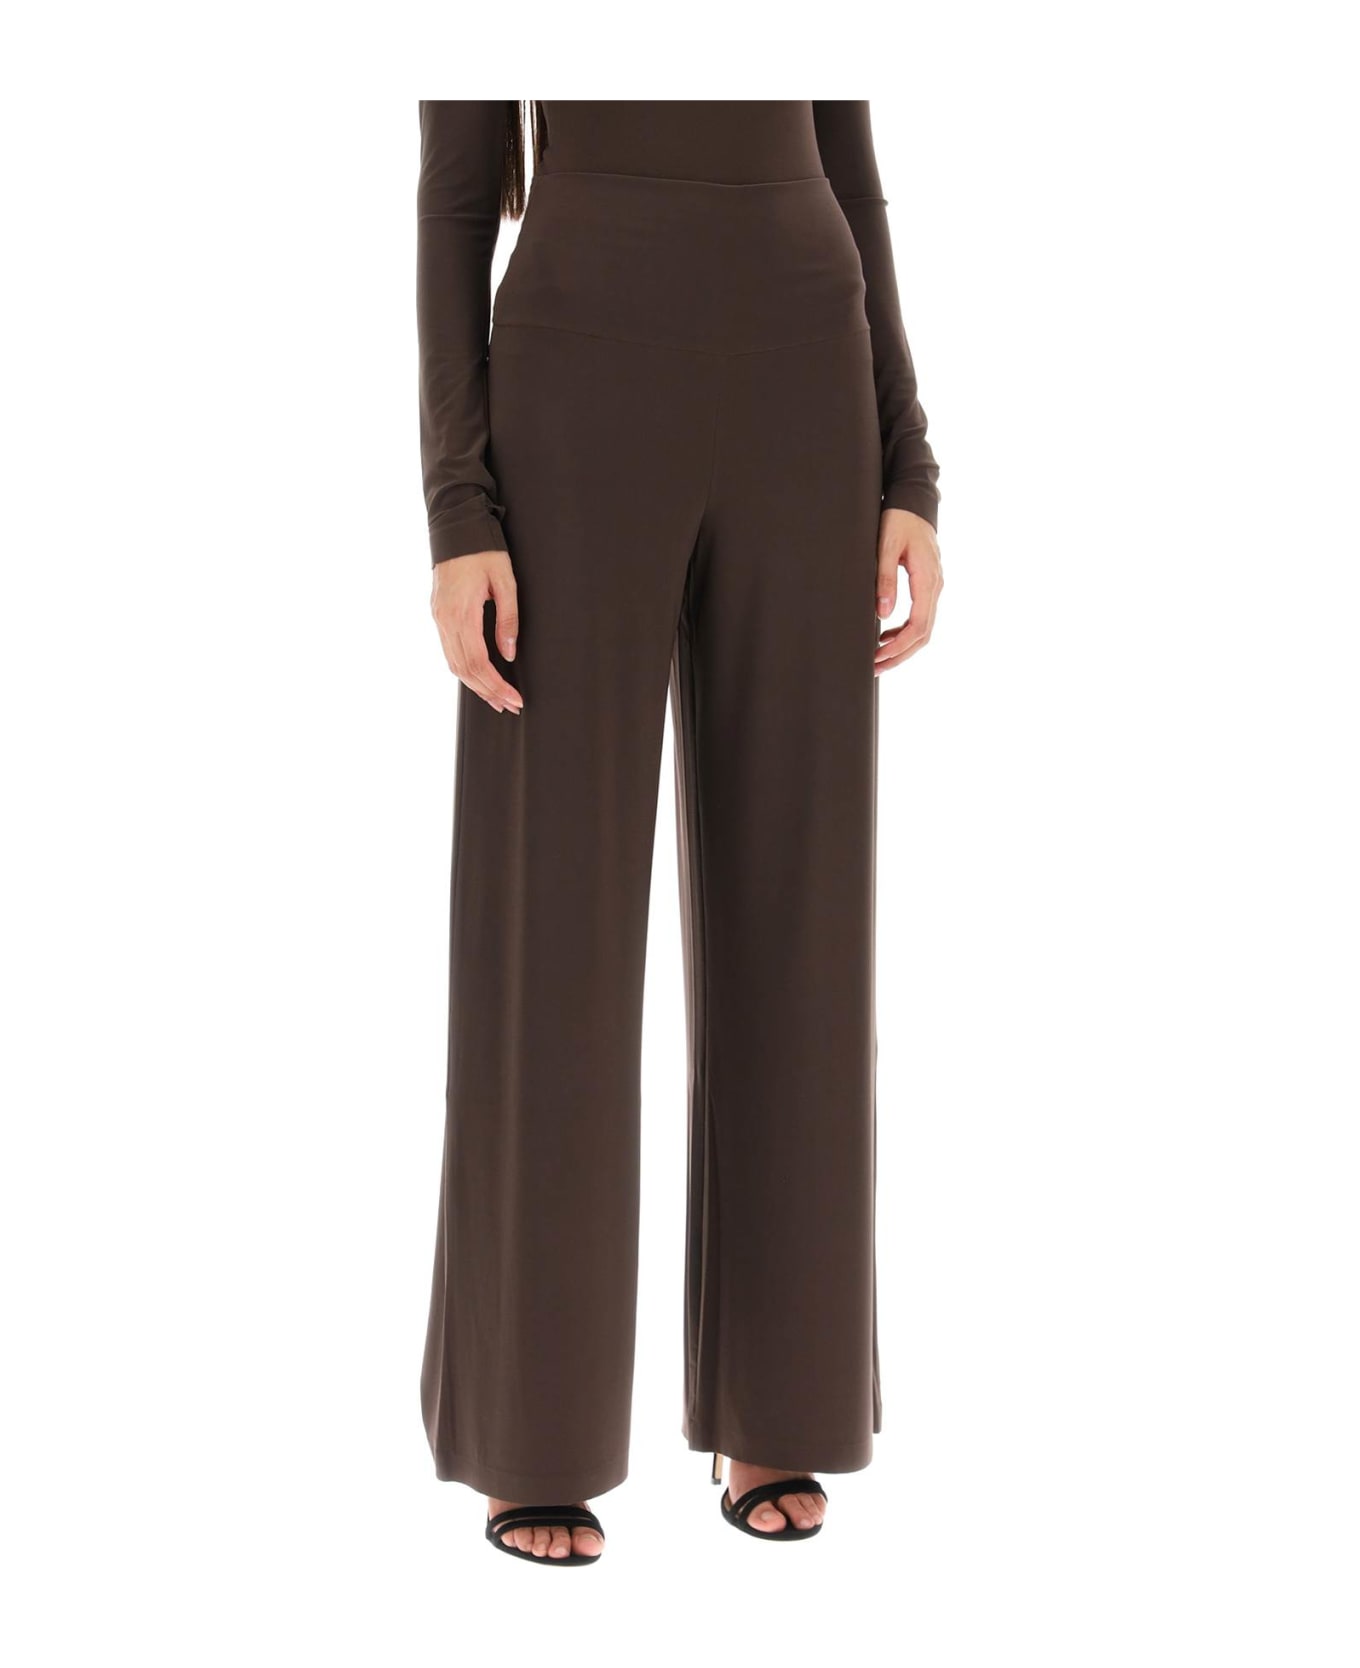 Norma Kamali Straight Jersey Pants - CHOCOLATE (Brown)